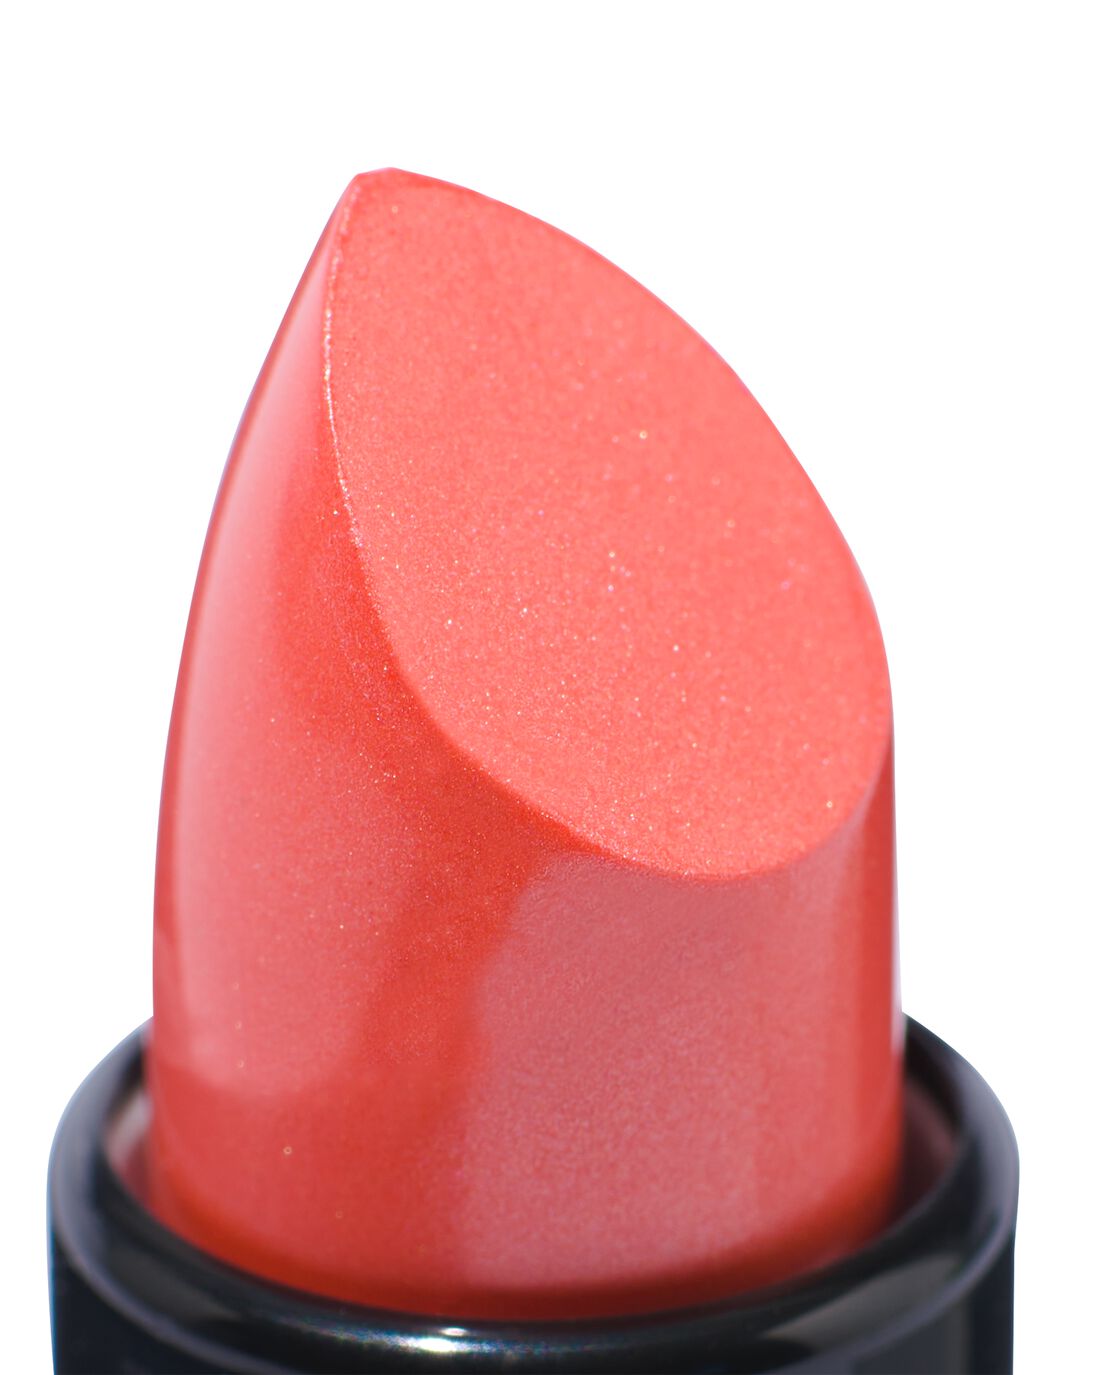 HEMA Lipstick Moisturizing 25 Queen Of Orange (lichtoranje)